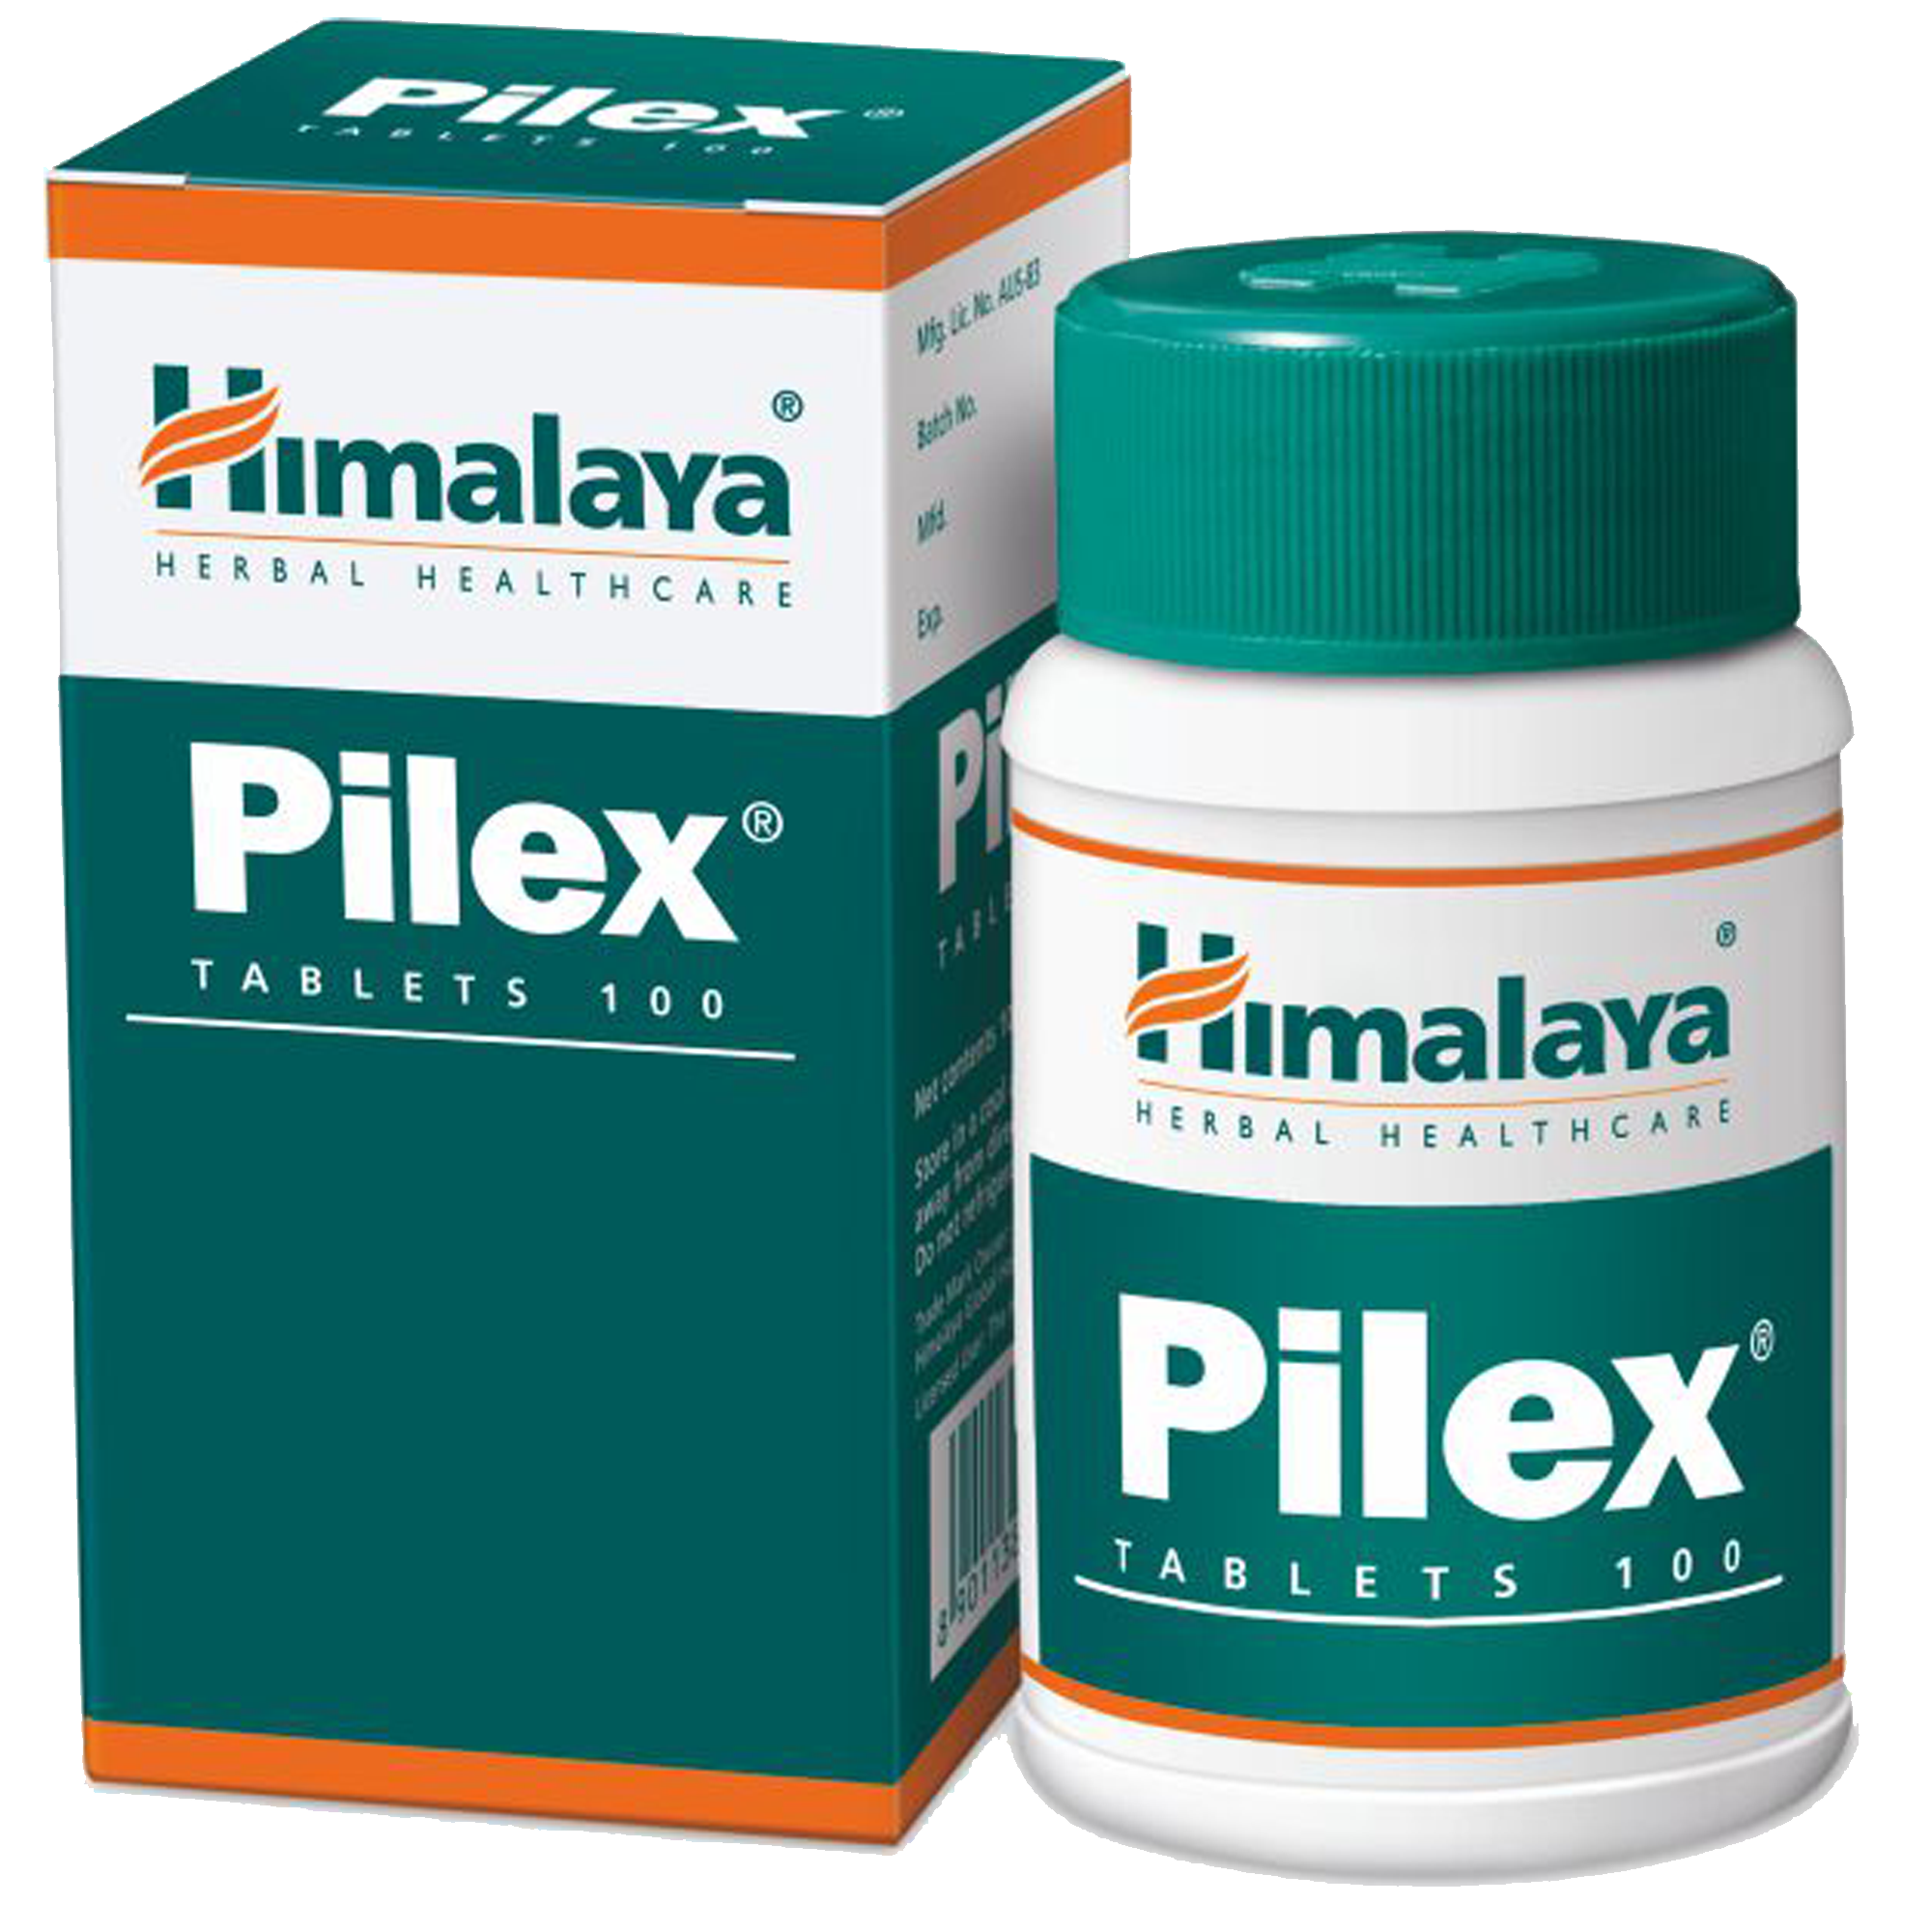 Himalaya Pilex Tablets 60's - For Piles and Hemorrhoids